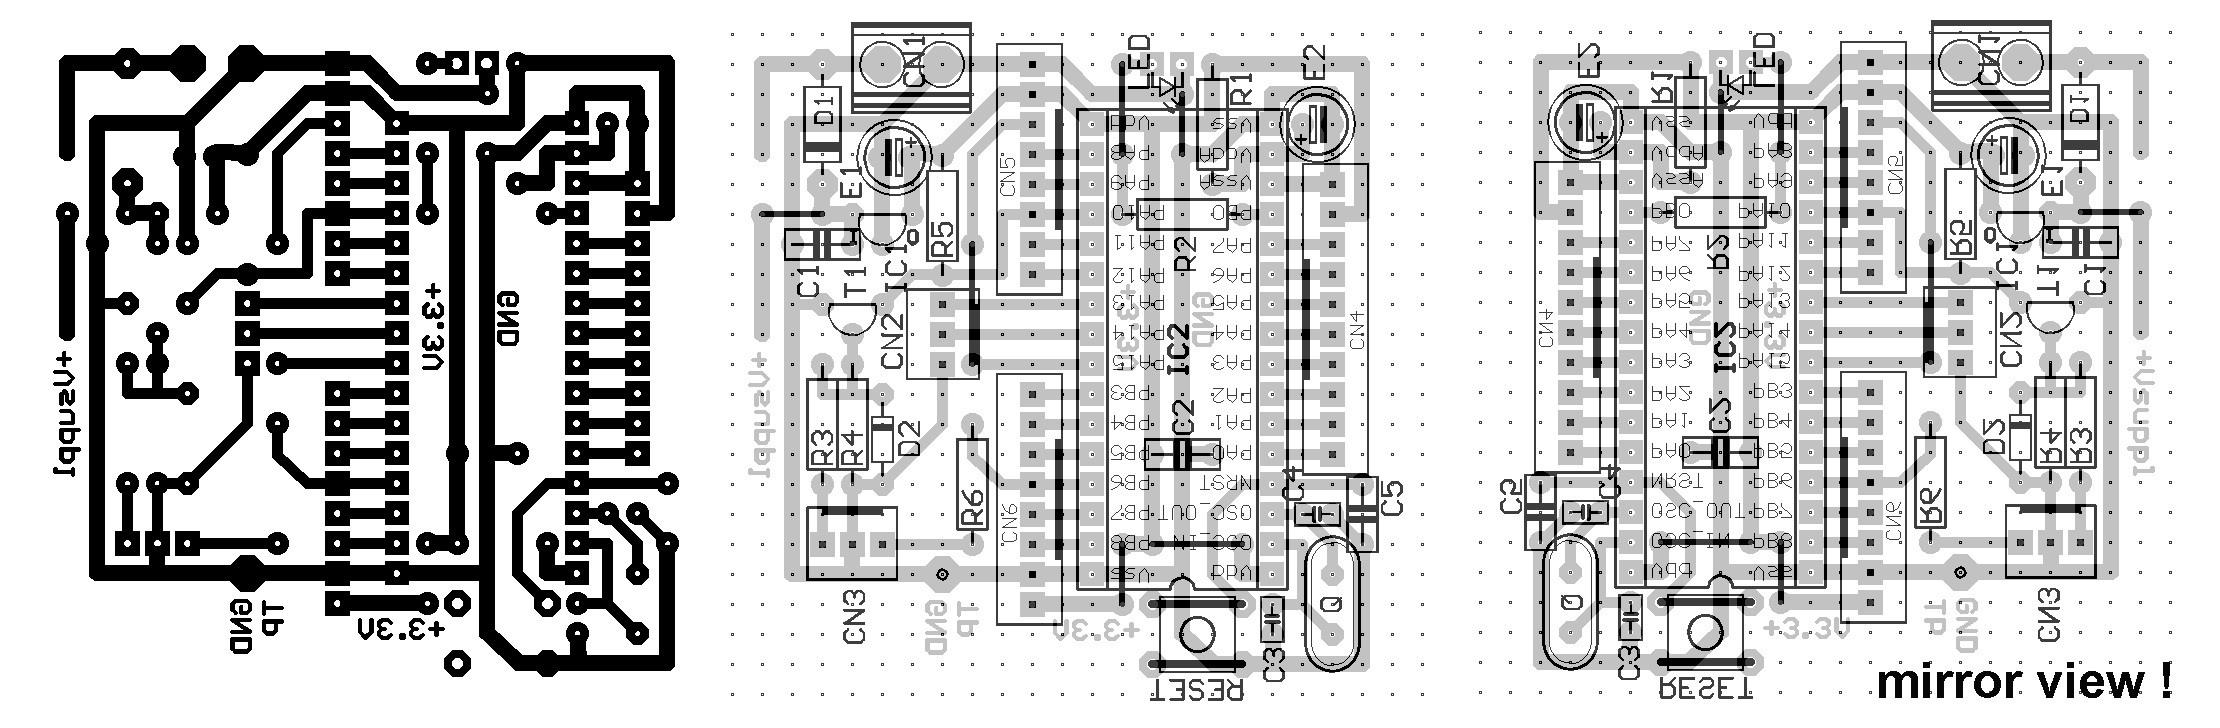 G431 LQFP32 pcb layout drawing